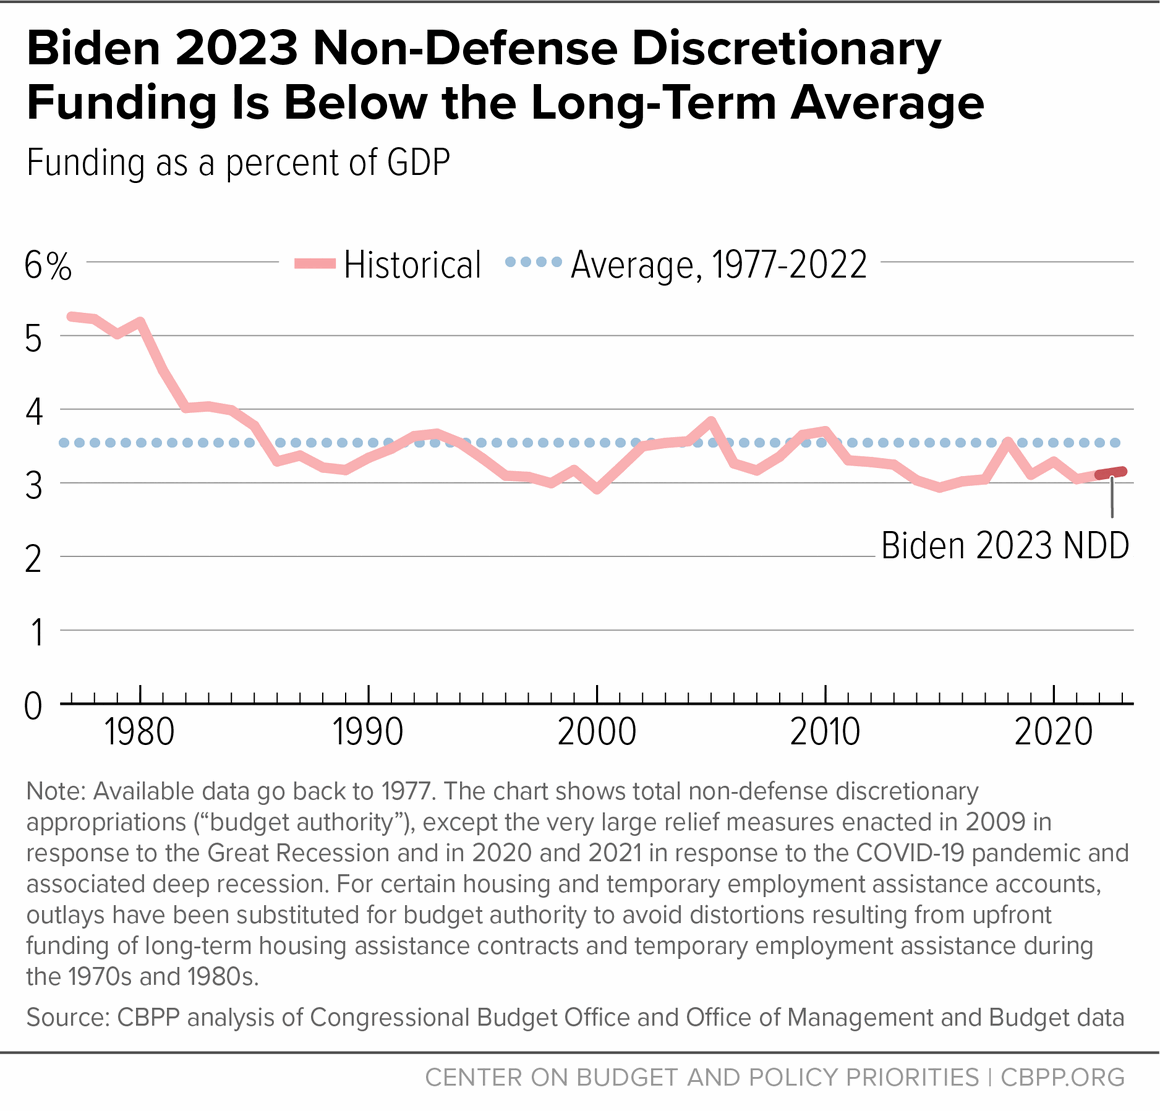 Biden 2033 Non-Defense Discretionary Funding is Below the Long-Term Average